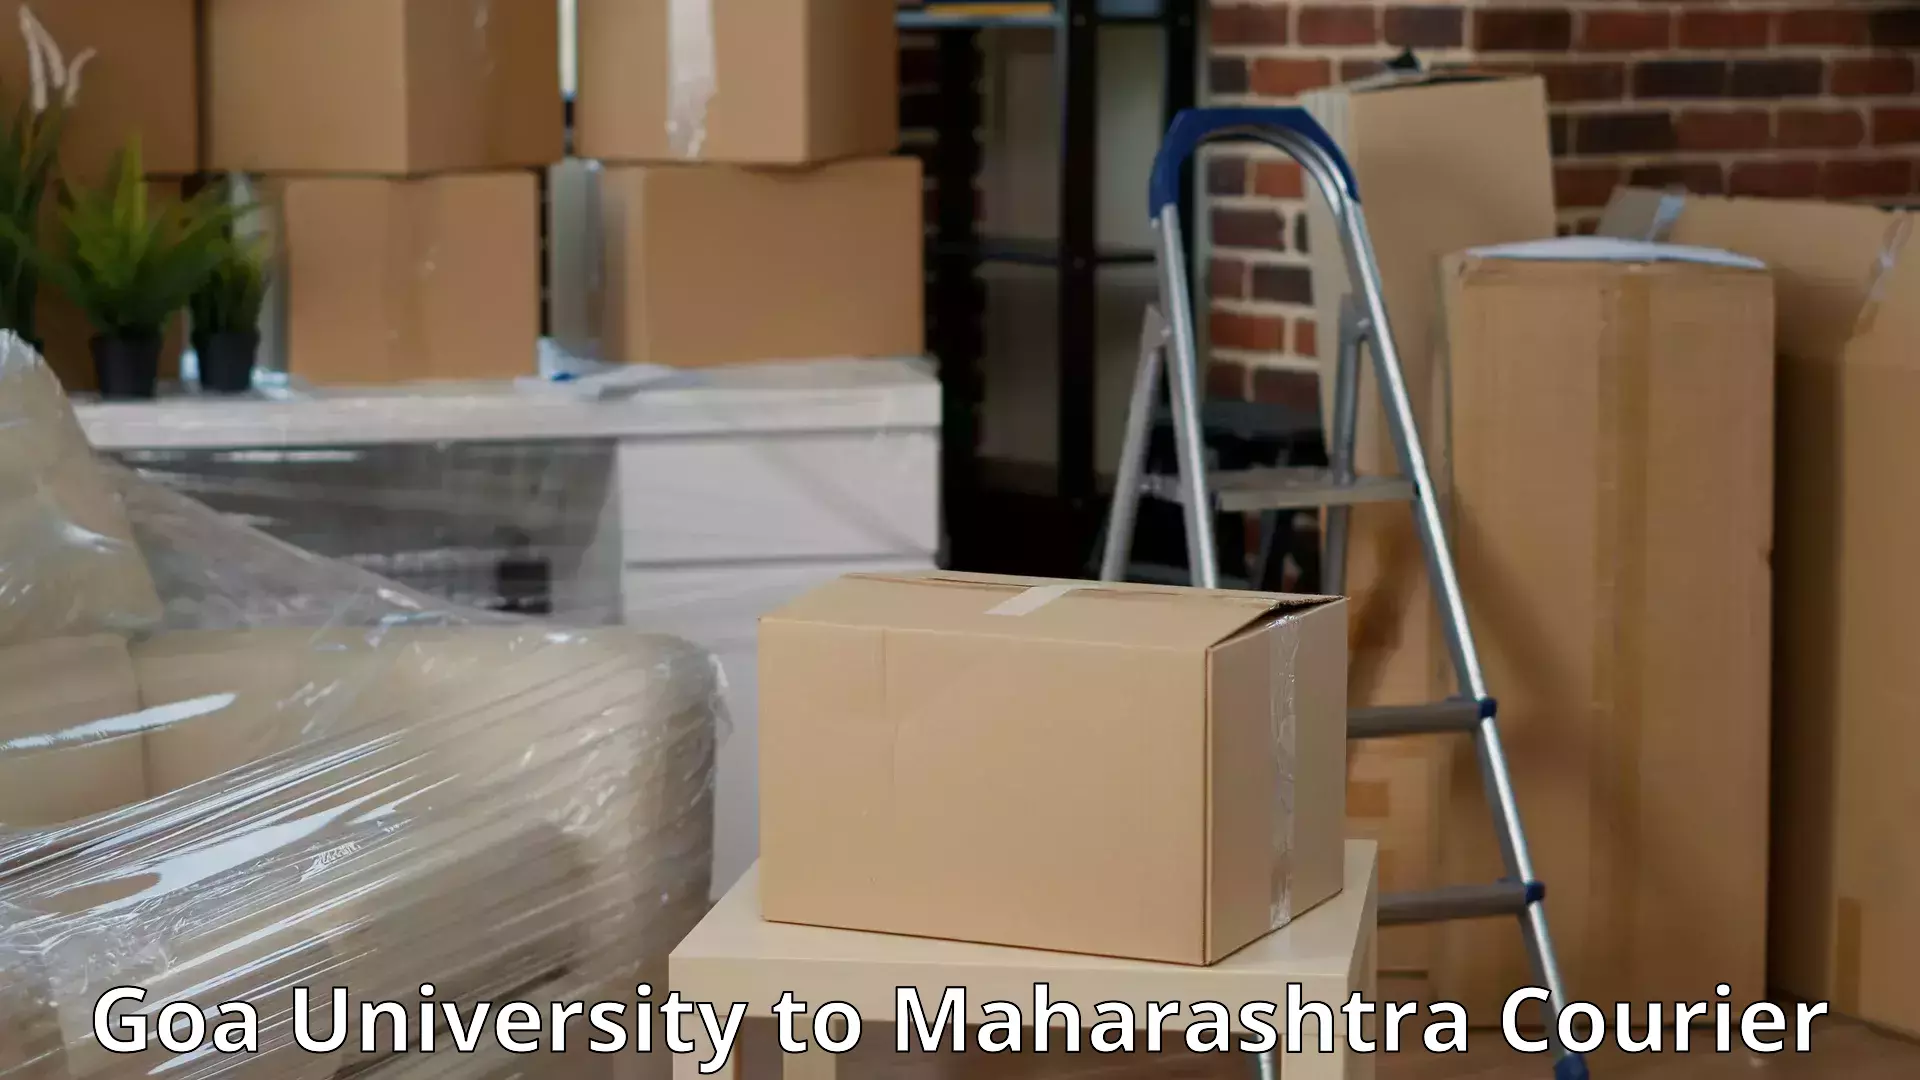 Efficient packing and moving Goa University to Nandura